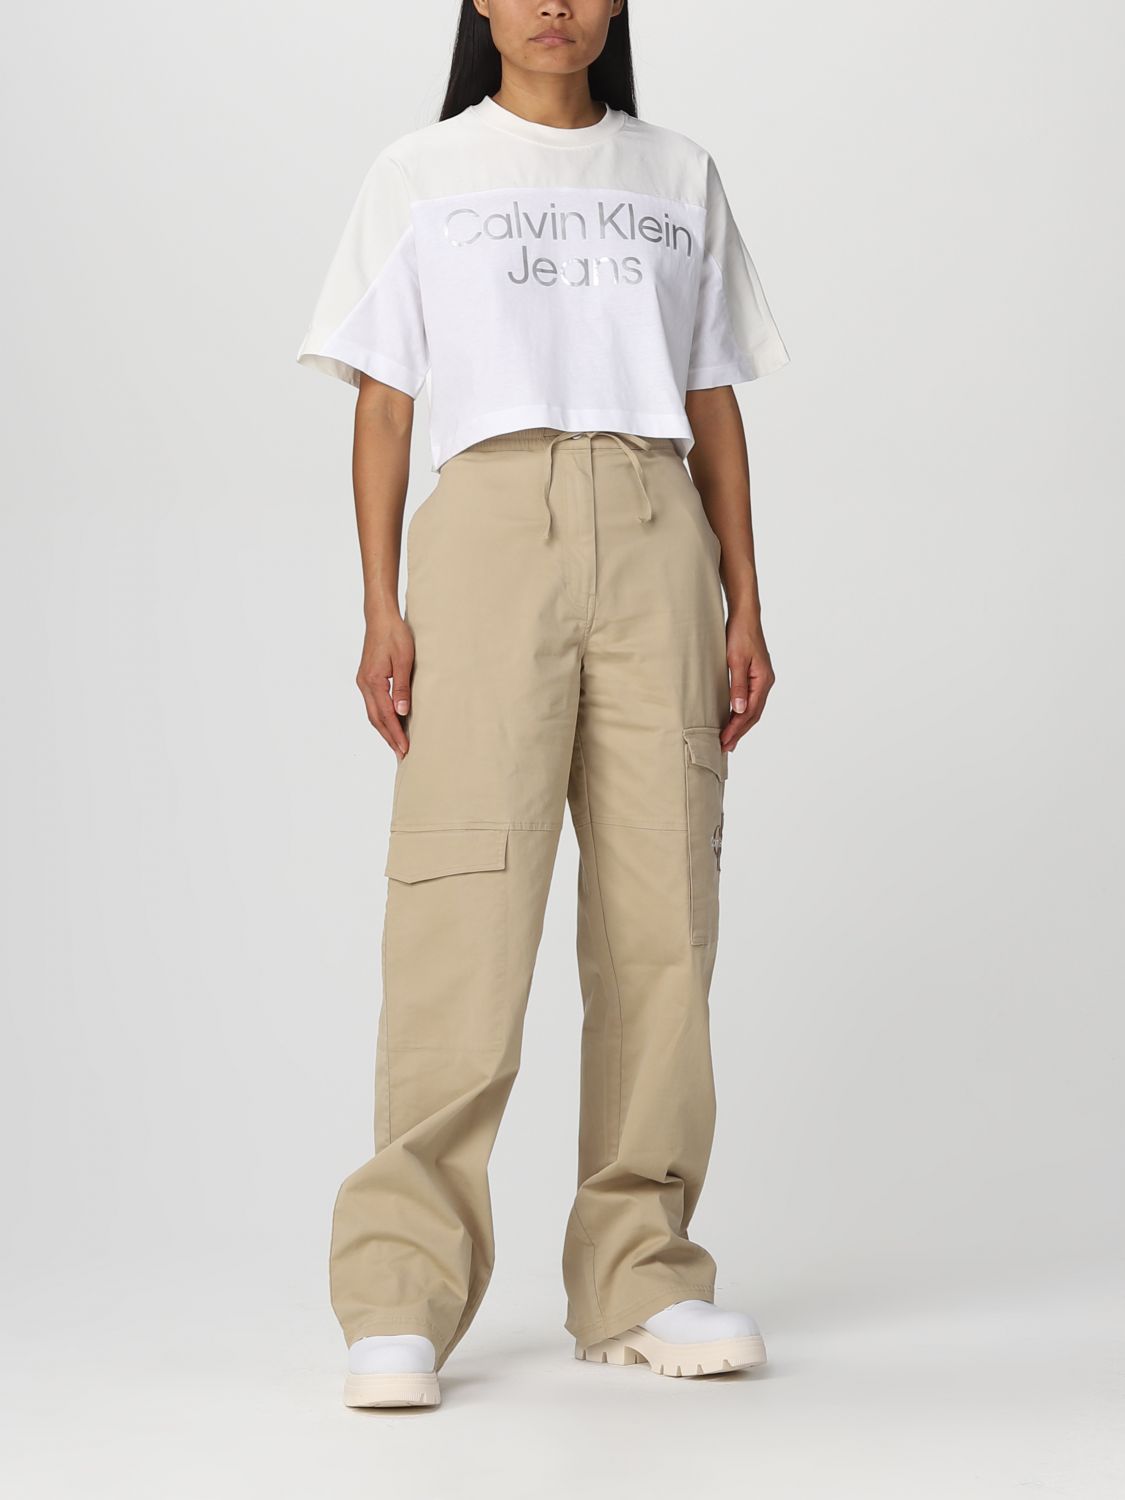 CALVIN KLEIN JEANS: jeans for woman - Beige | Calvin Klein Jeans jeans  J20J220263 online on 